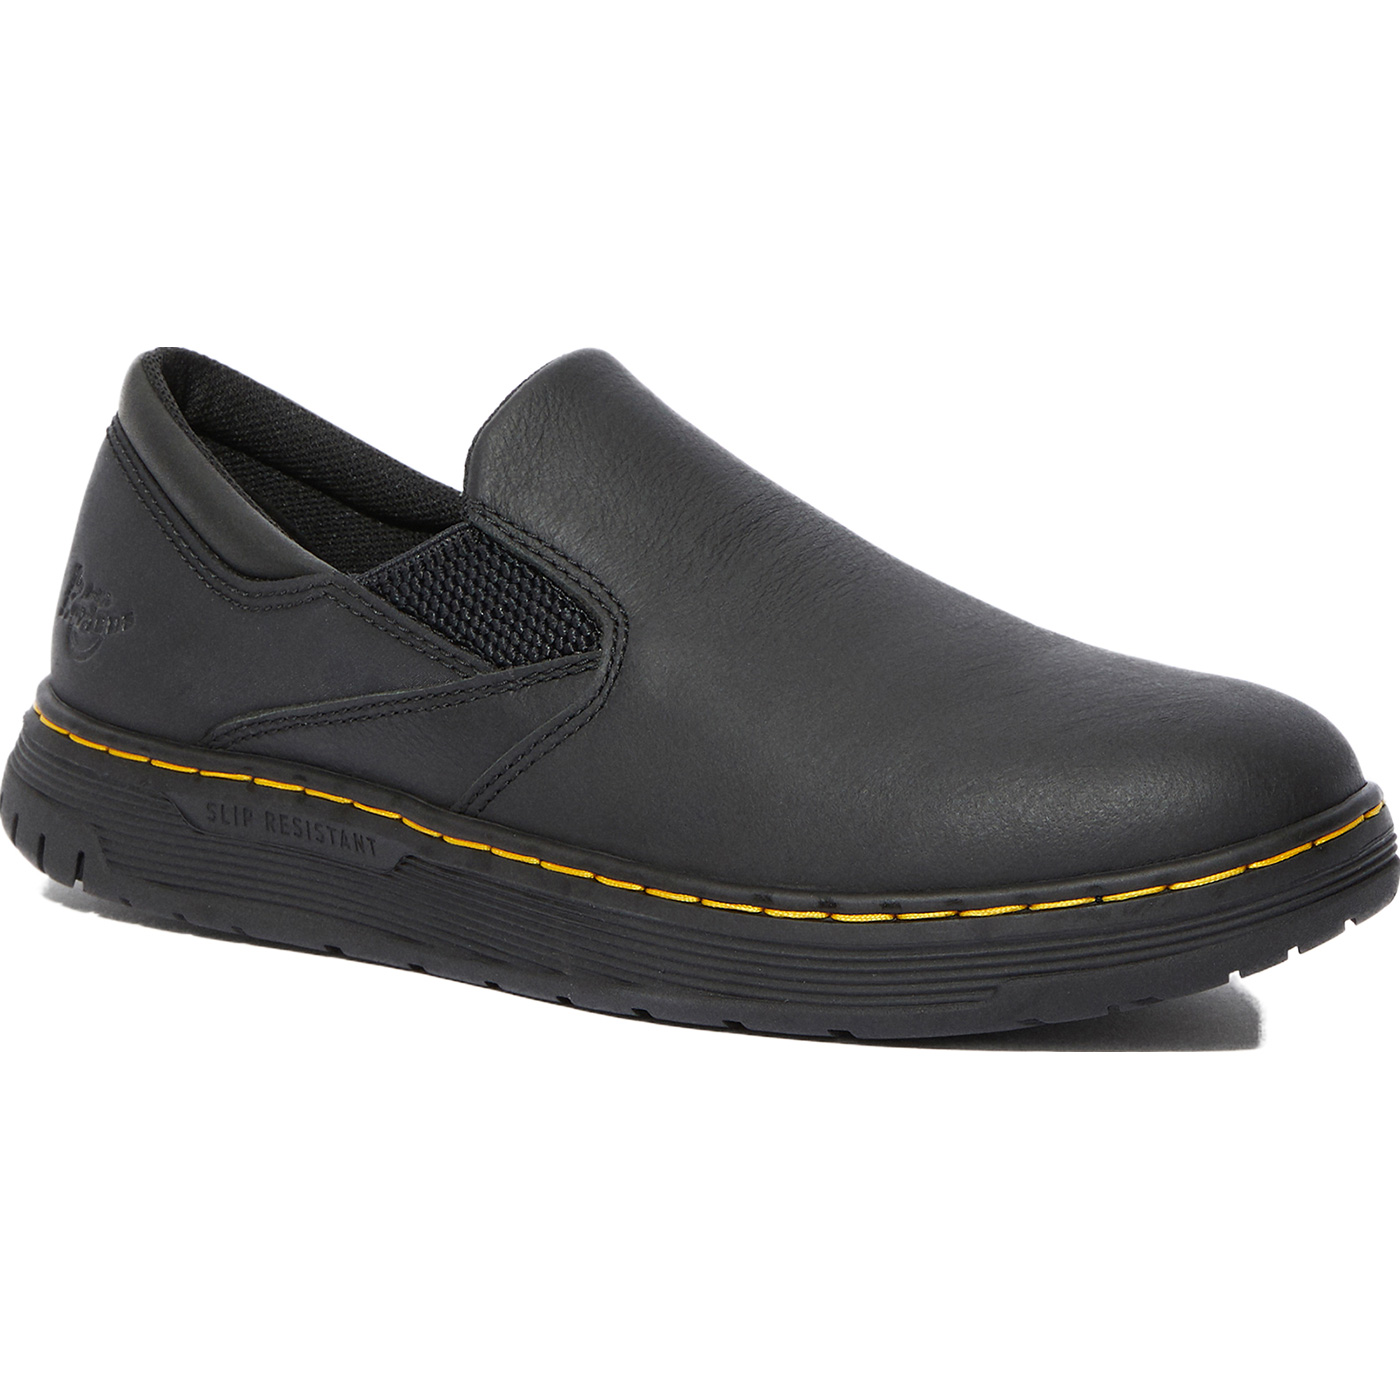 Dr. Martens Slip-Resistant Shoes for Restaurant Workers